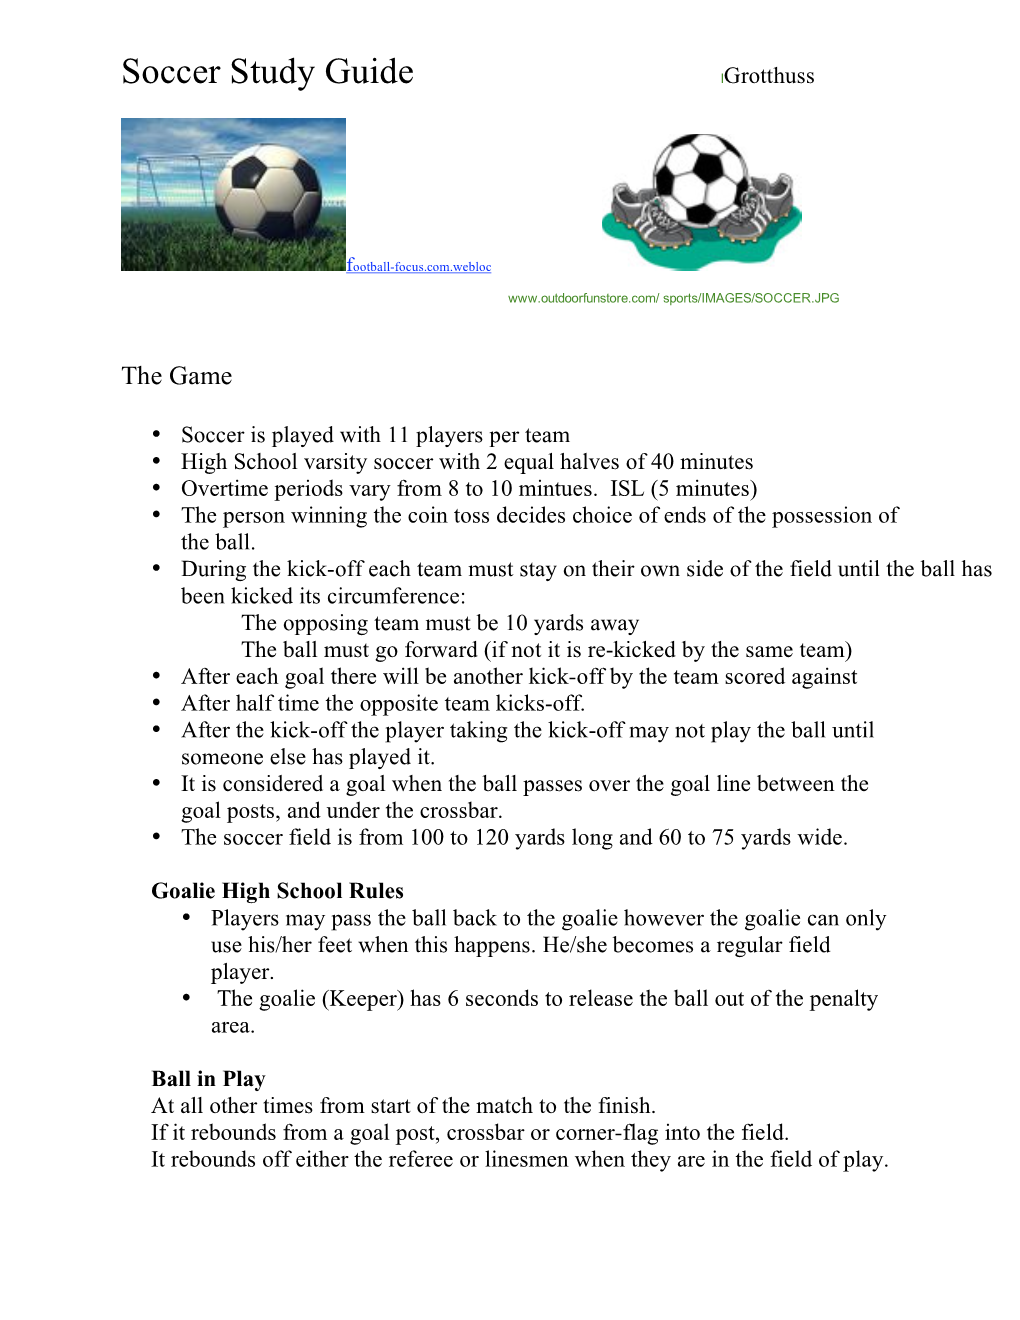 Soccer Study Guide Lgrotthuss